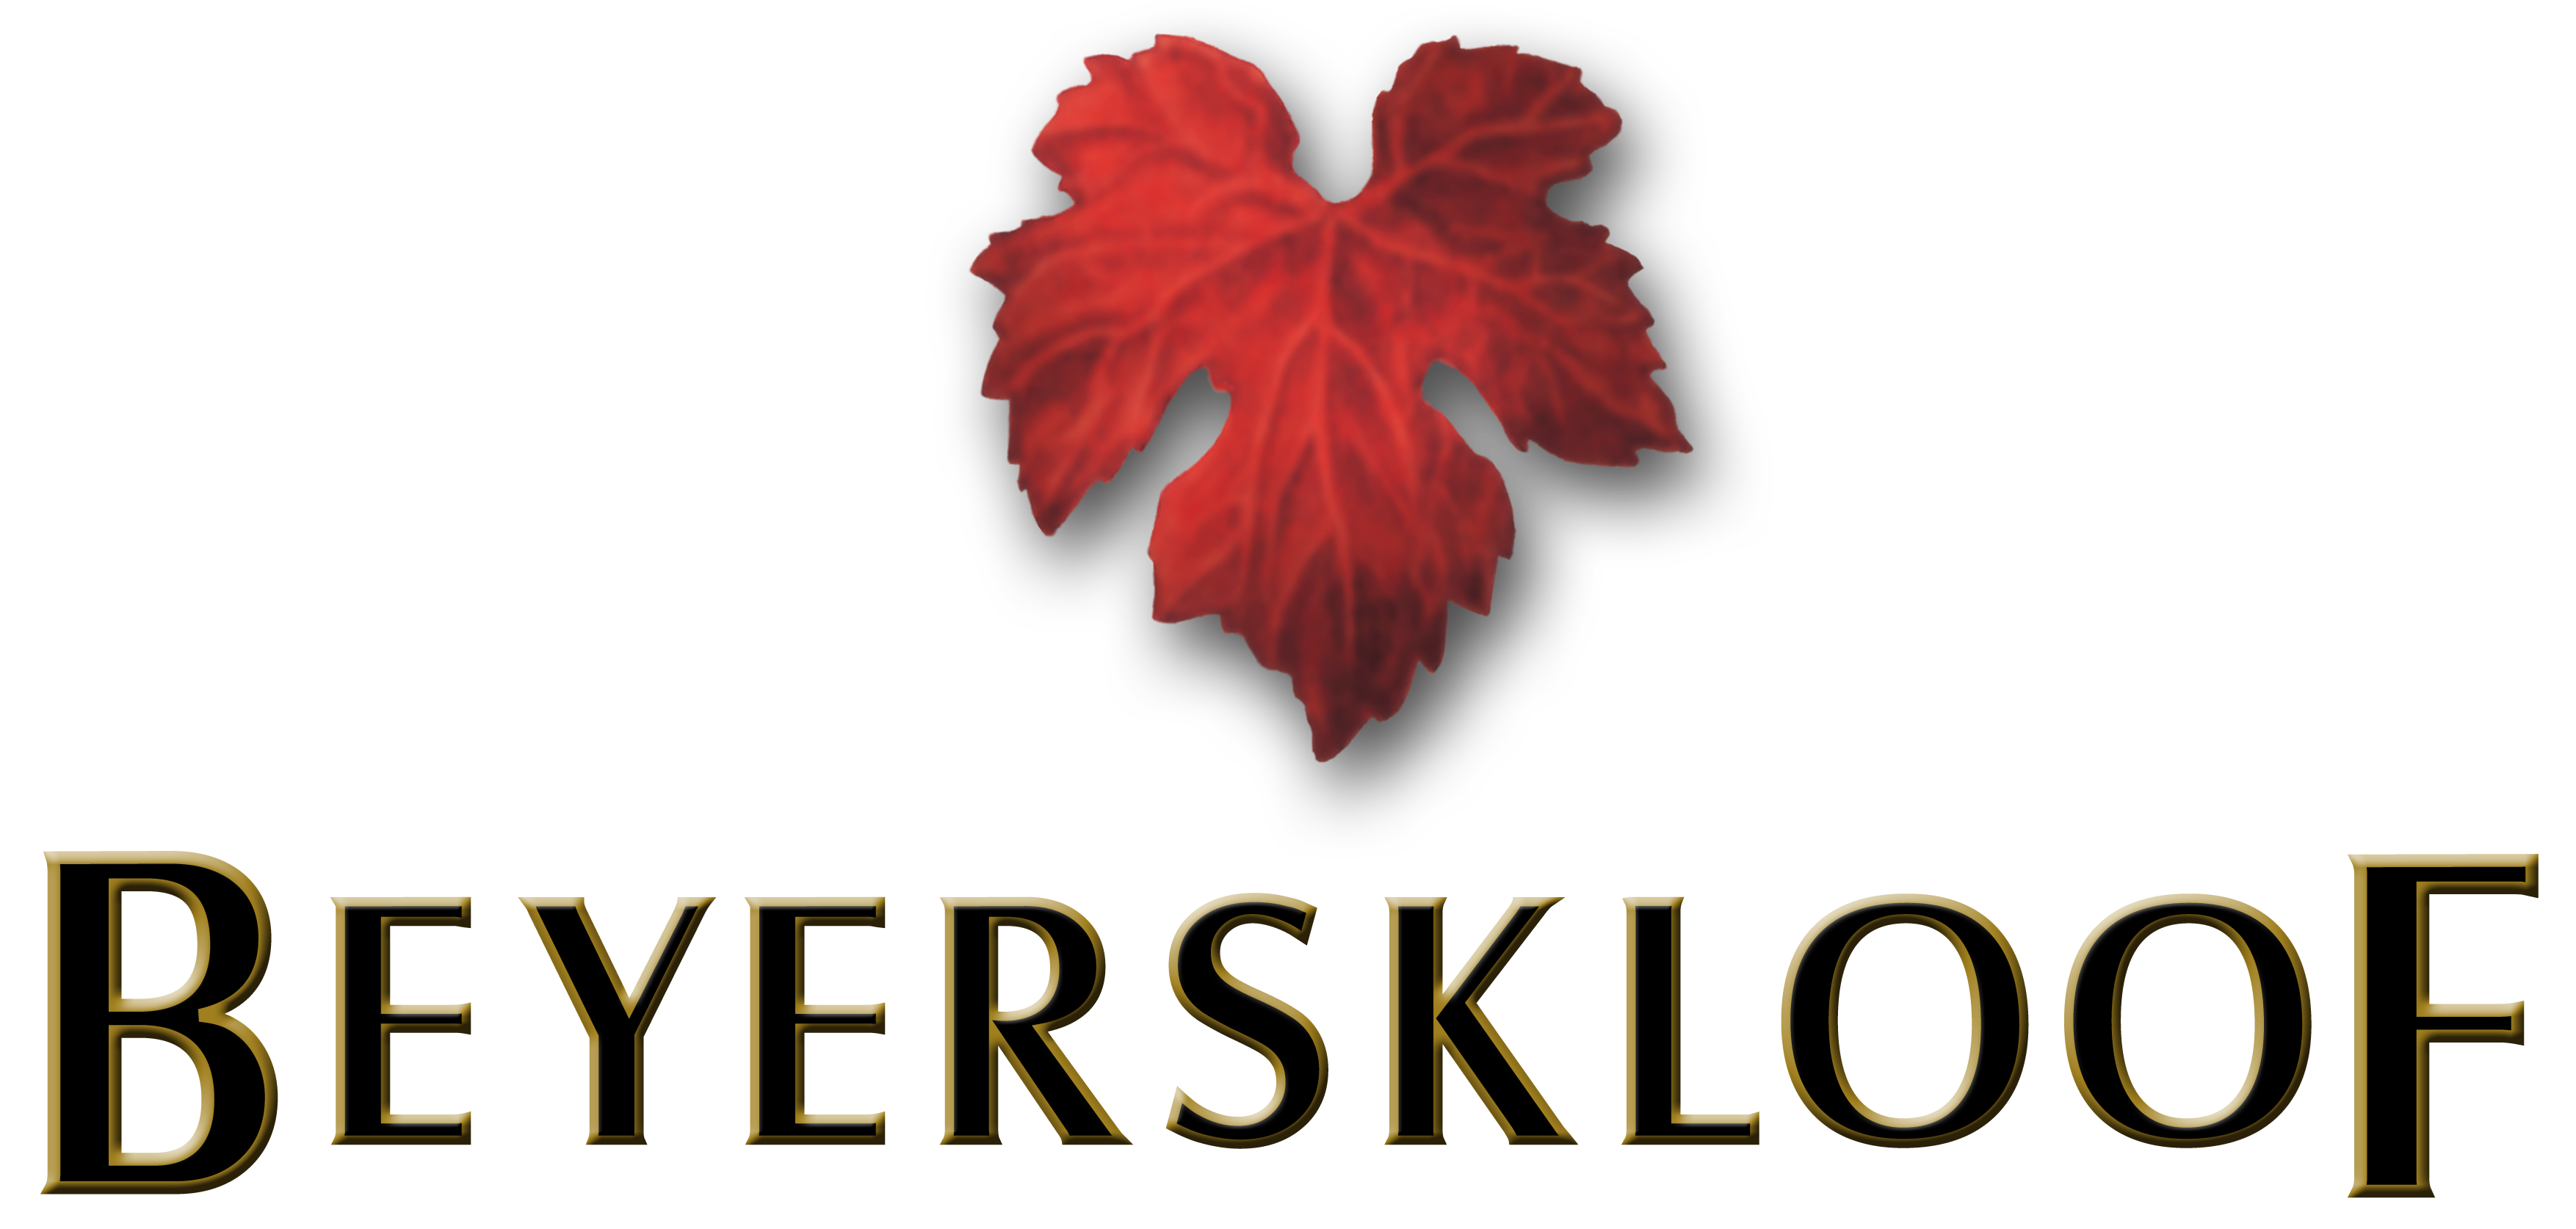 Beyerskloof Logo (300dpi).png